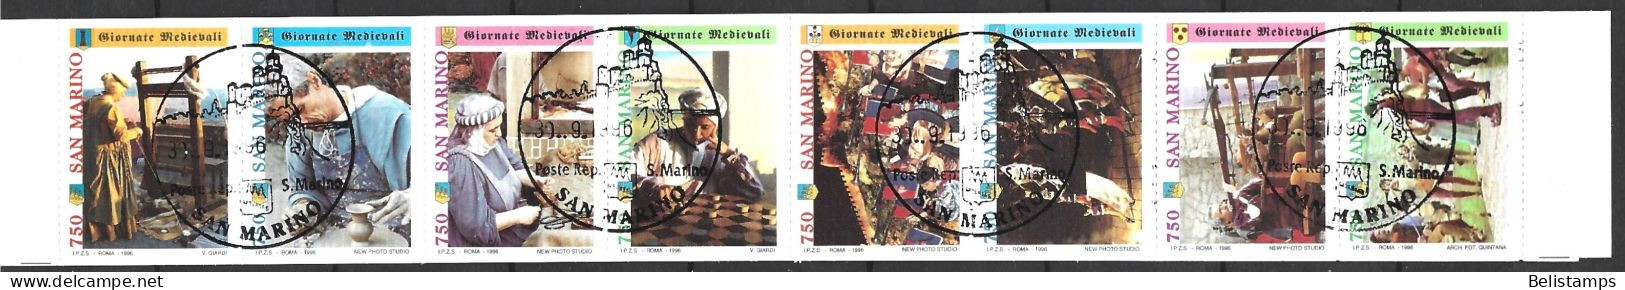 San Marino 1996. Scott #1365a (U) Medieval Days Celebration  *Complete Booklet* - Used Stamps